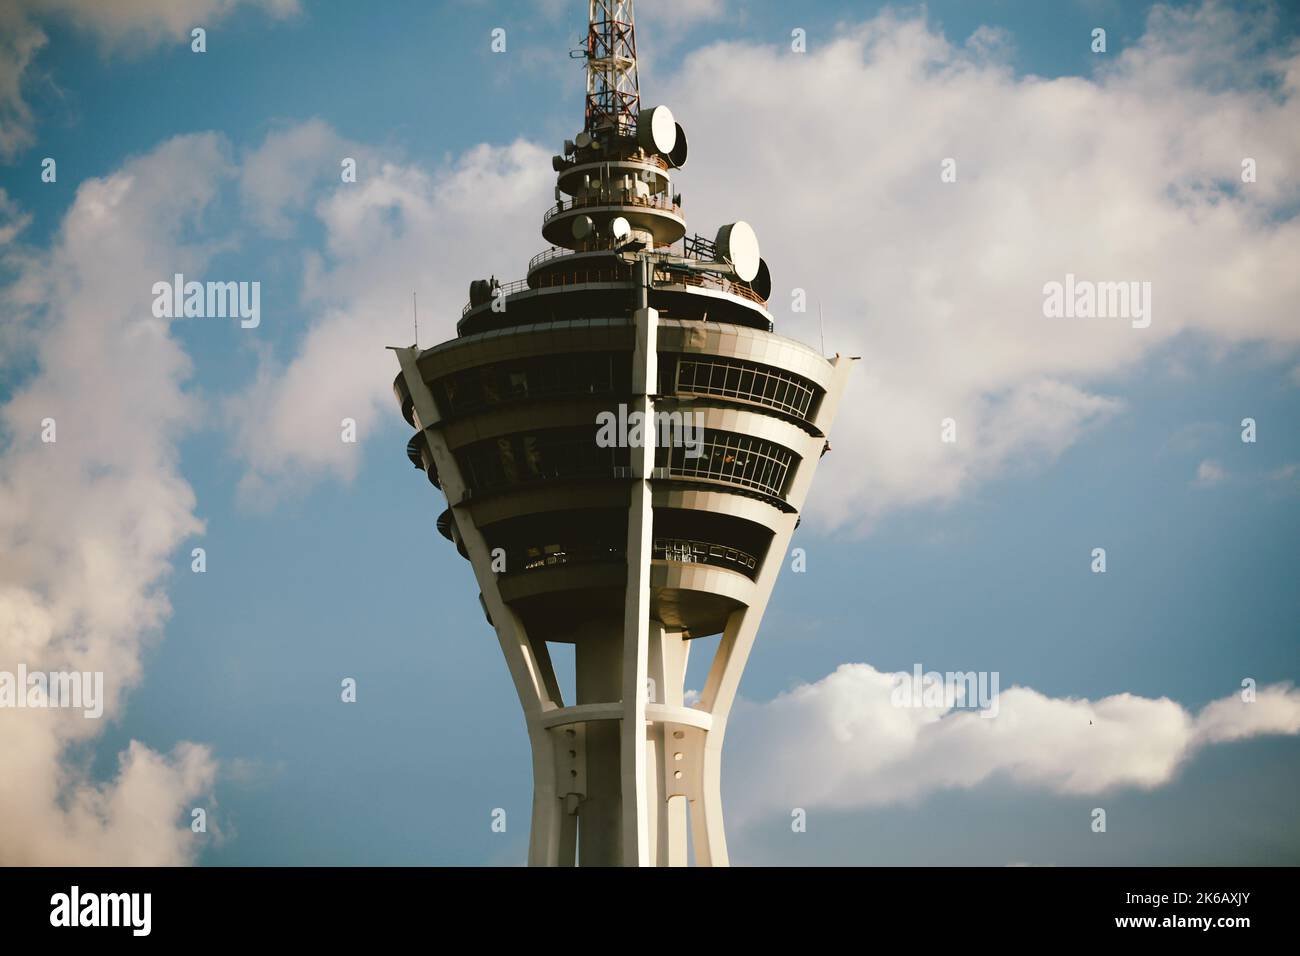 PERLIS, MALAYSIA - Oktober , 2017: Alor Setar Tower, Telekommunikationsturm in Alor Setar mit der Wolke und dem blauen Himmel in Kedah, Malaysia. Stockfoto